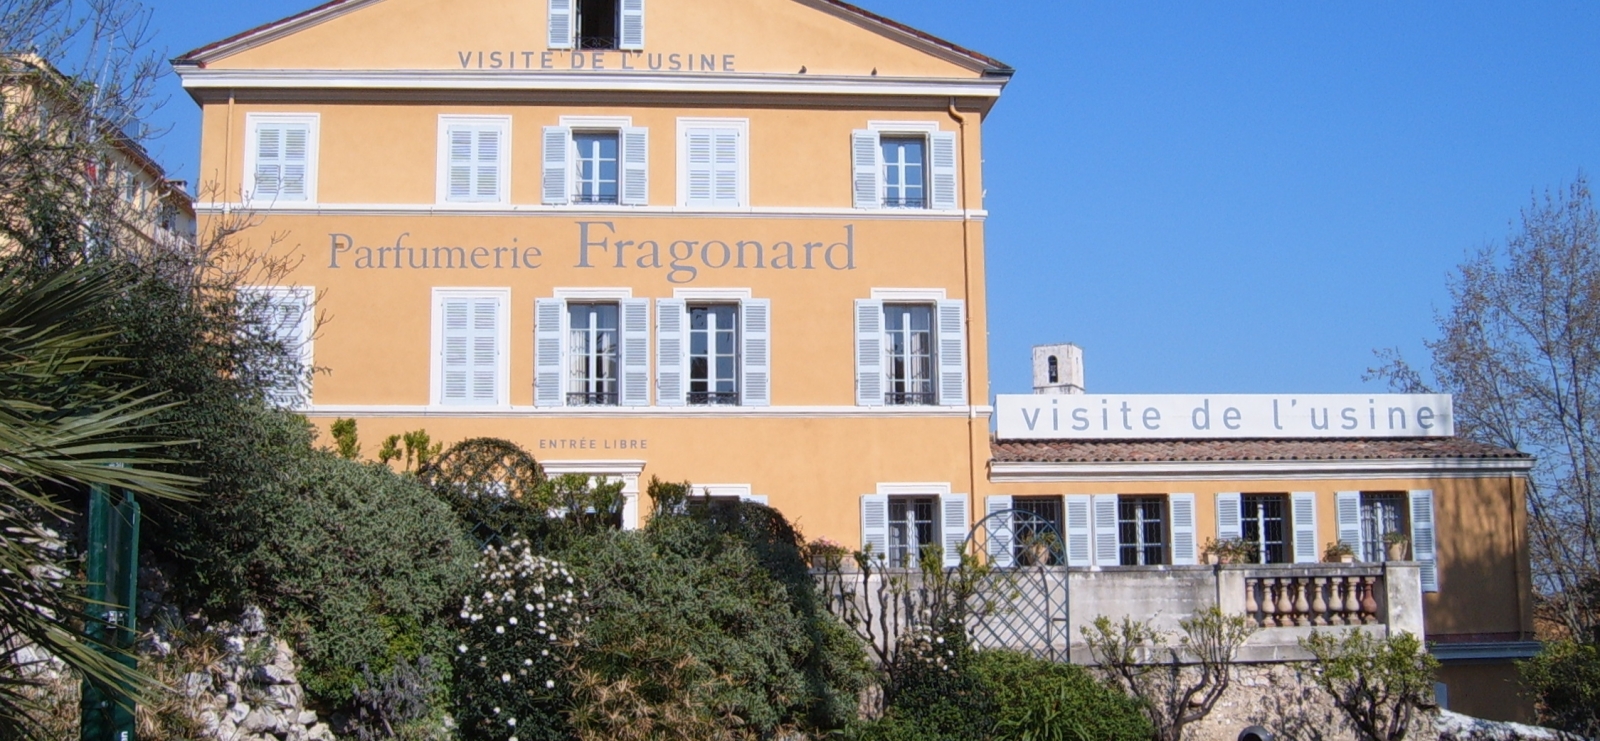 Profumeria Fragonard - La Fabbrica storica